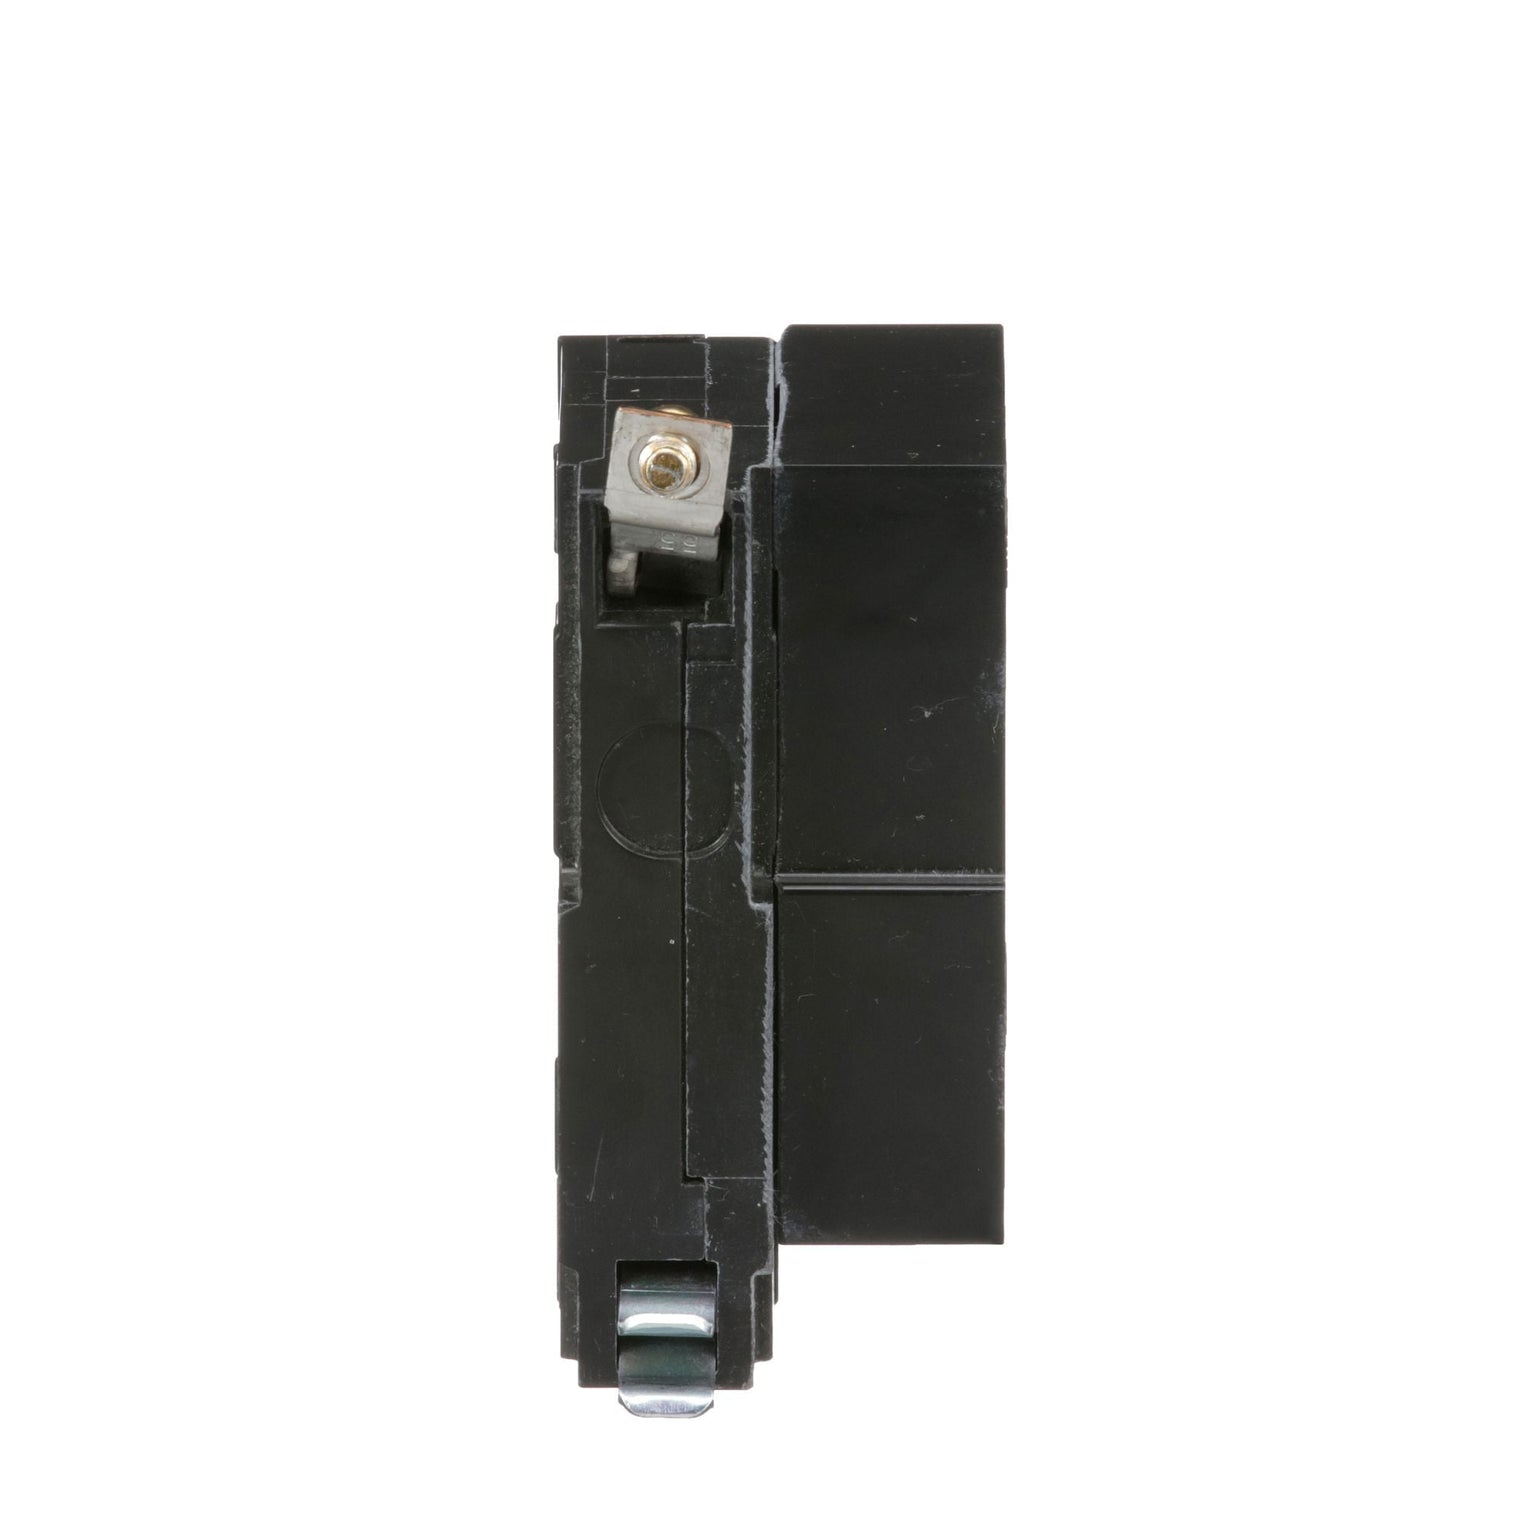 QOB120VH1021 - Square D - Molded Case Circuit Breakers